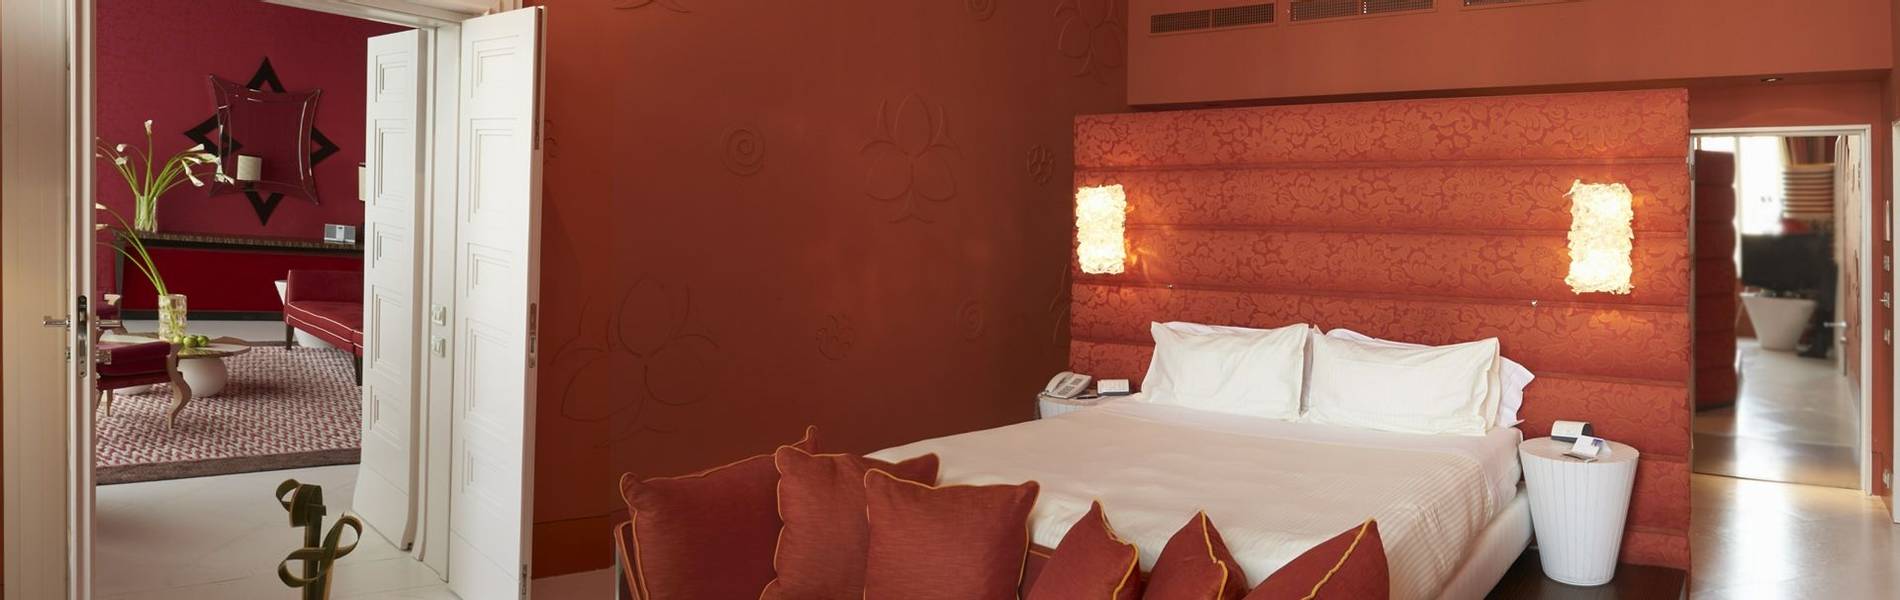 Sina Centurion Palace Suite Deluxe bedroom 1 .jpg